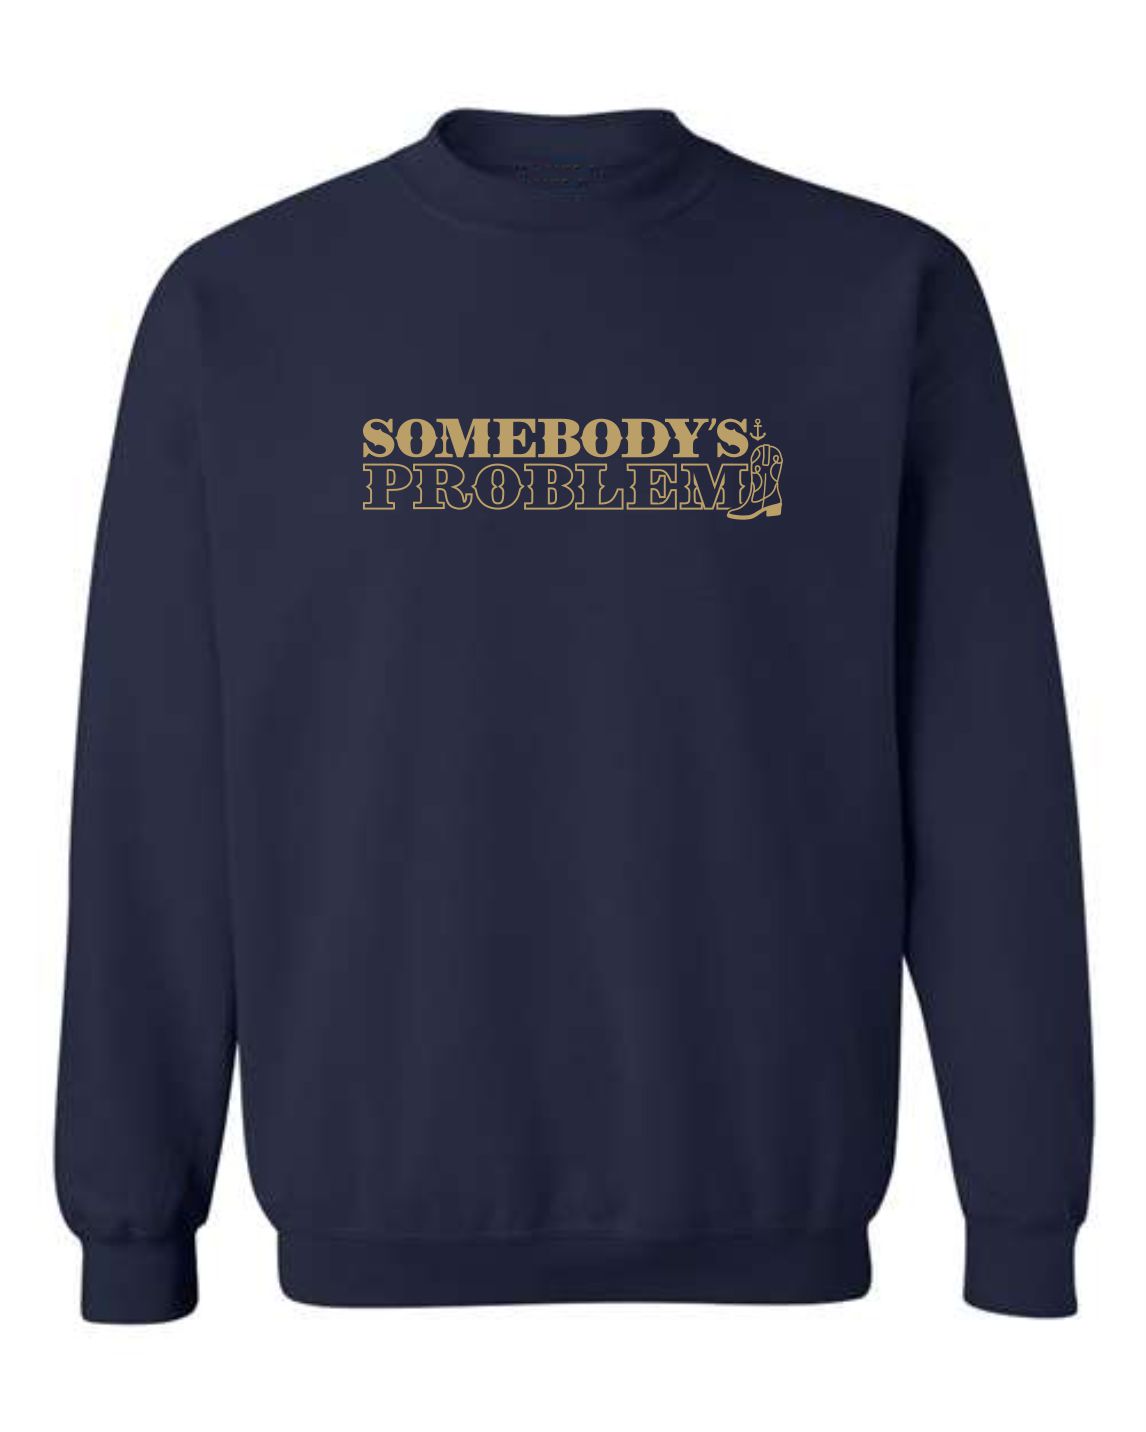 "Somebody's Problem" Unisex Crewneck Sweatshirt